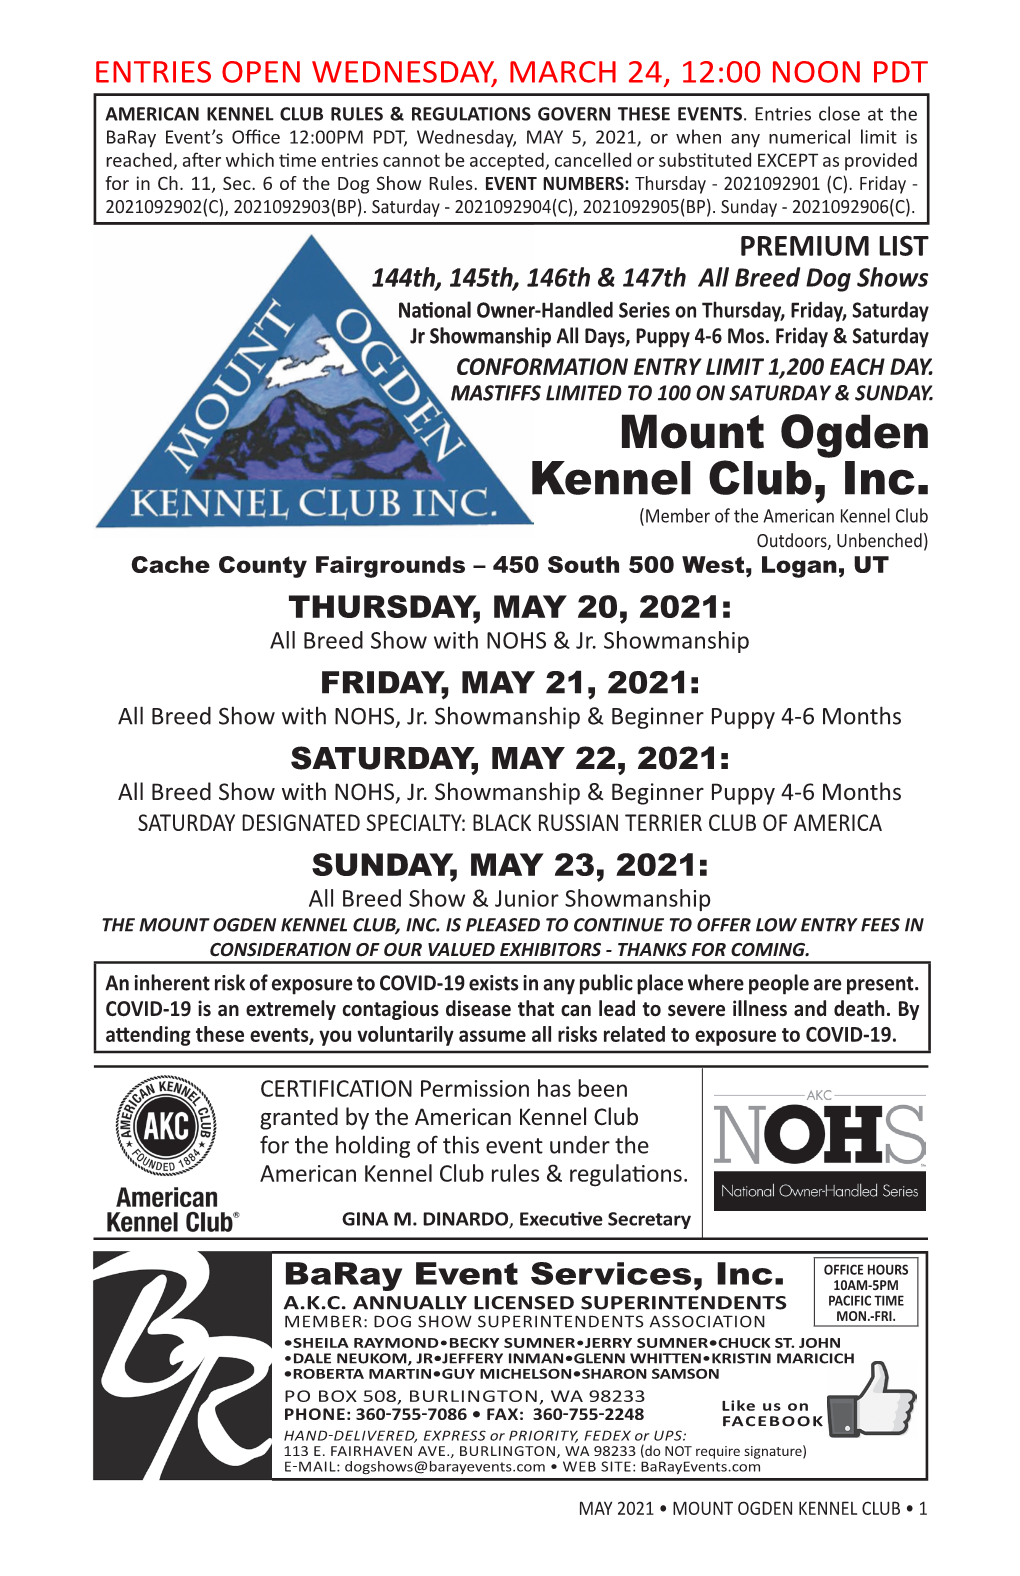 Mount Ogden Kennel Club, Inc